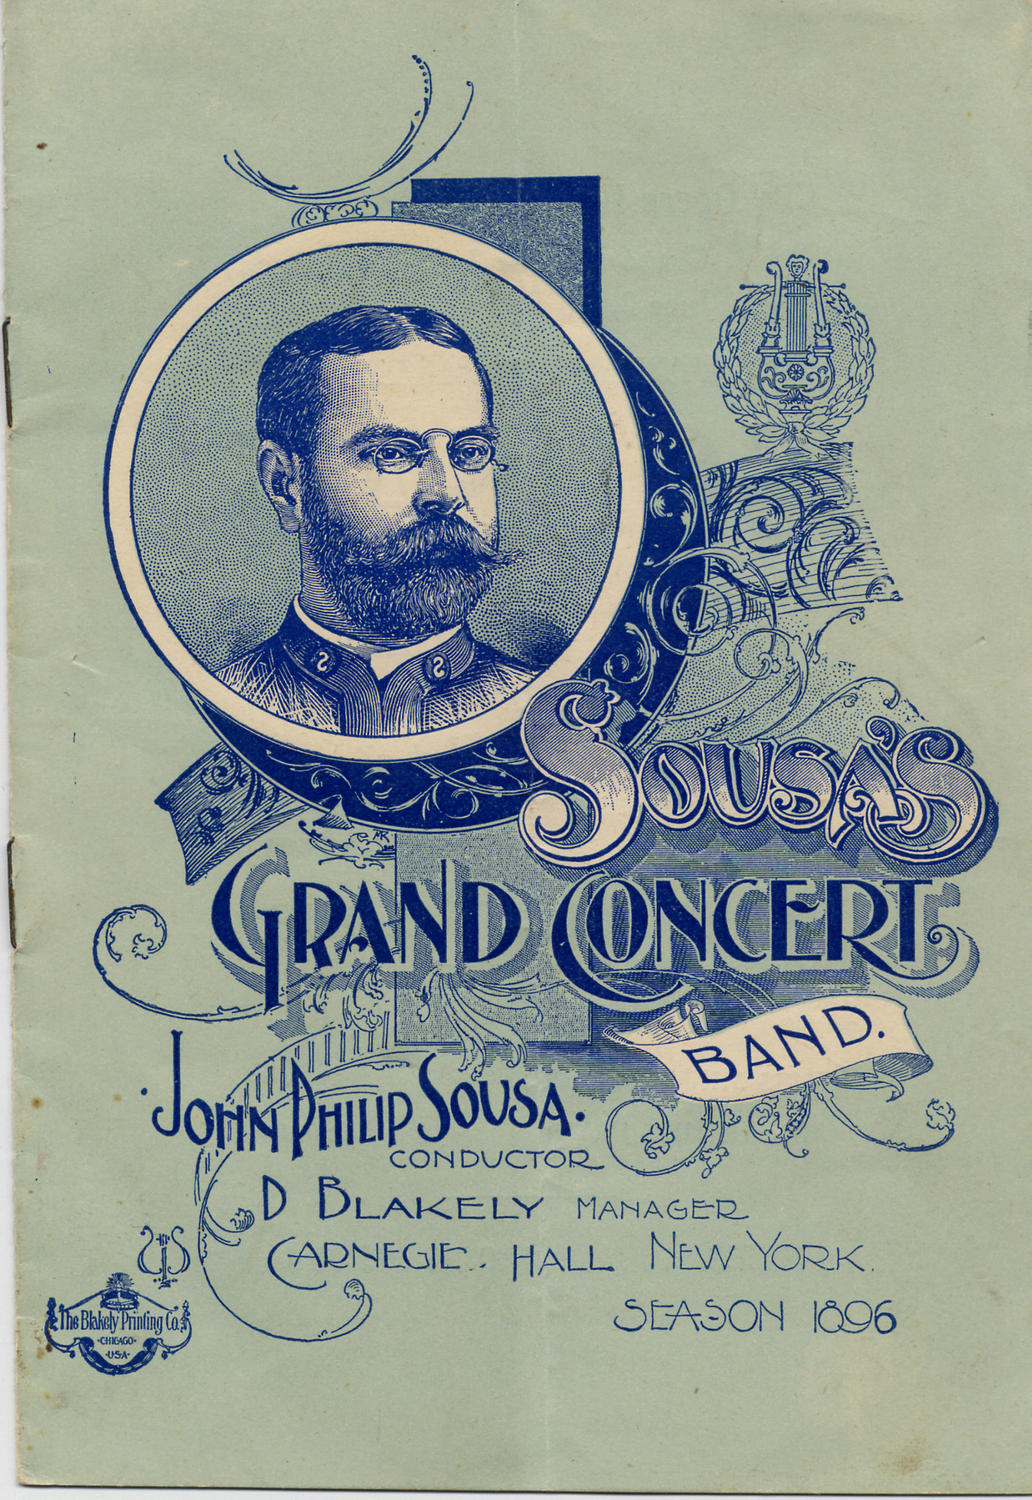 Sousa's Grand Concert Band, 1896